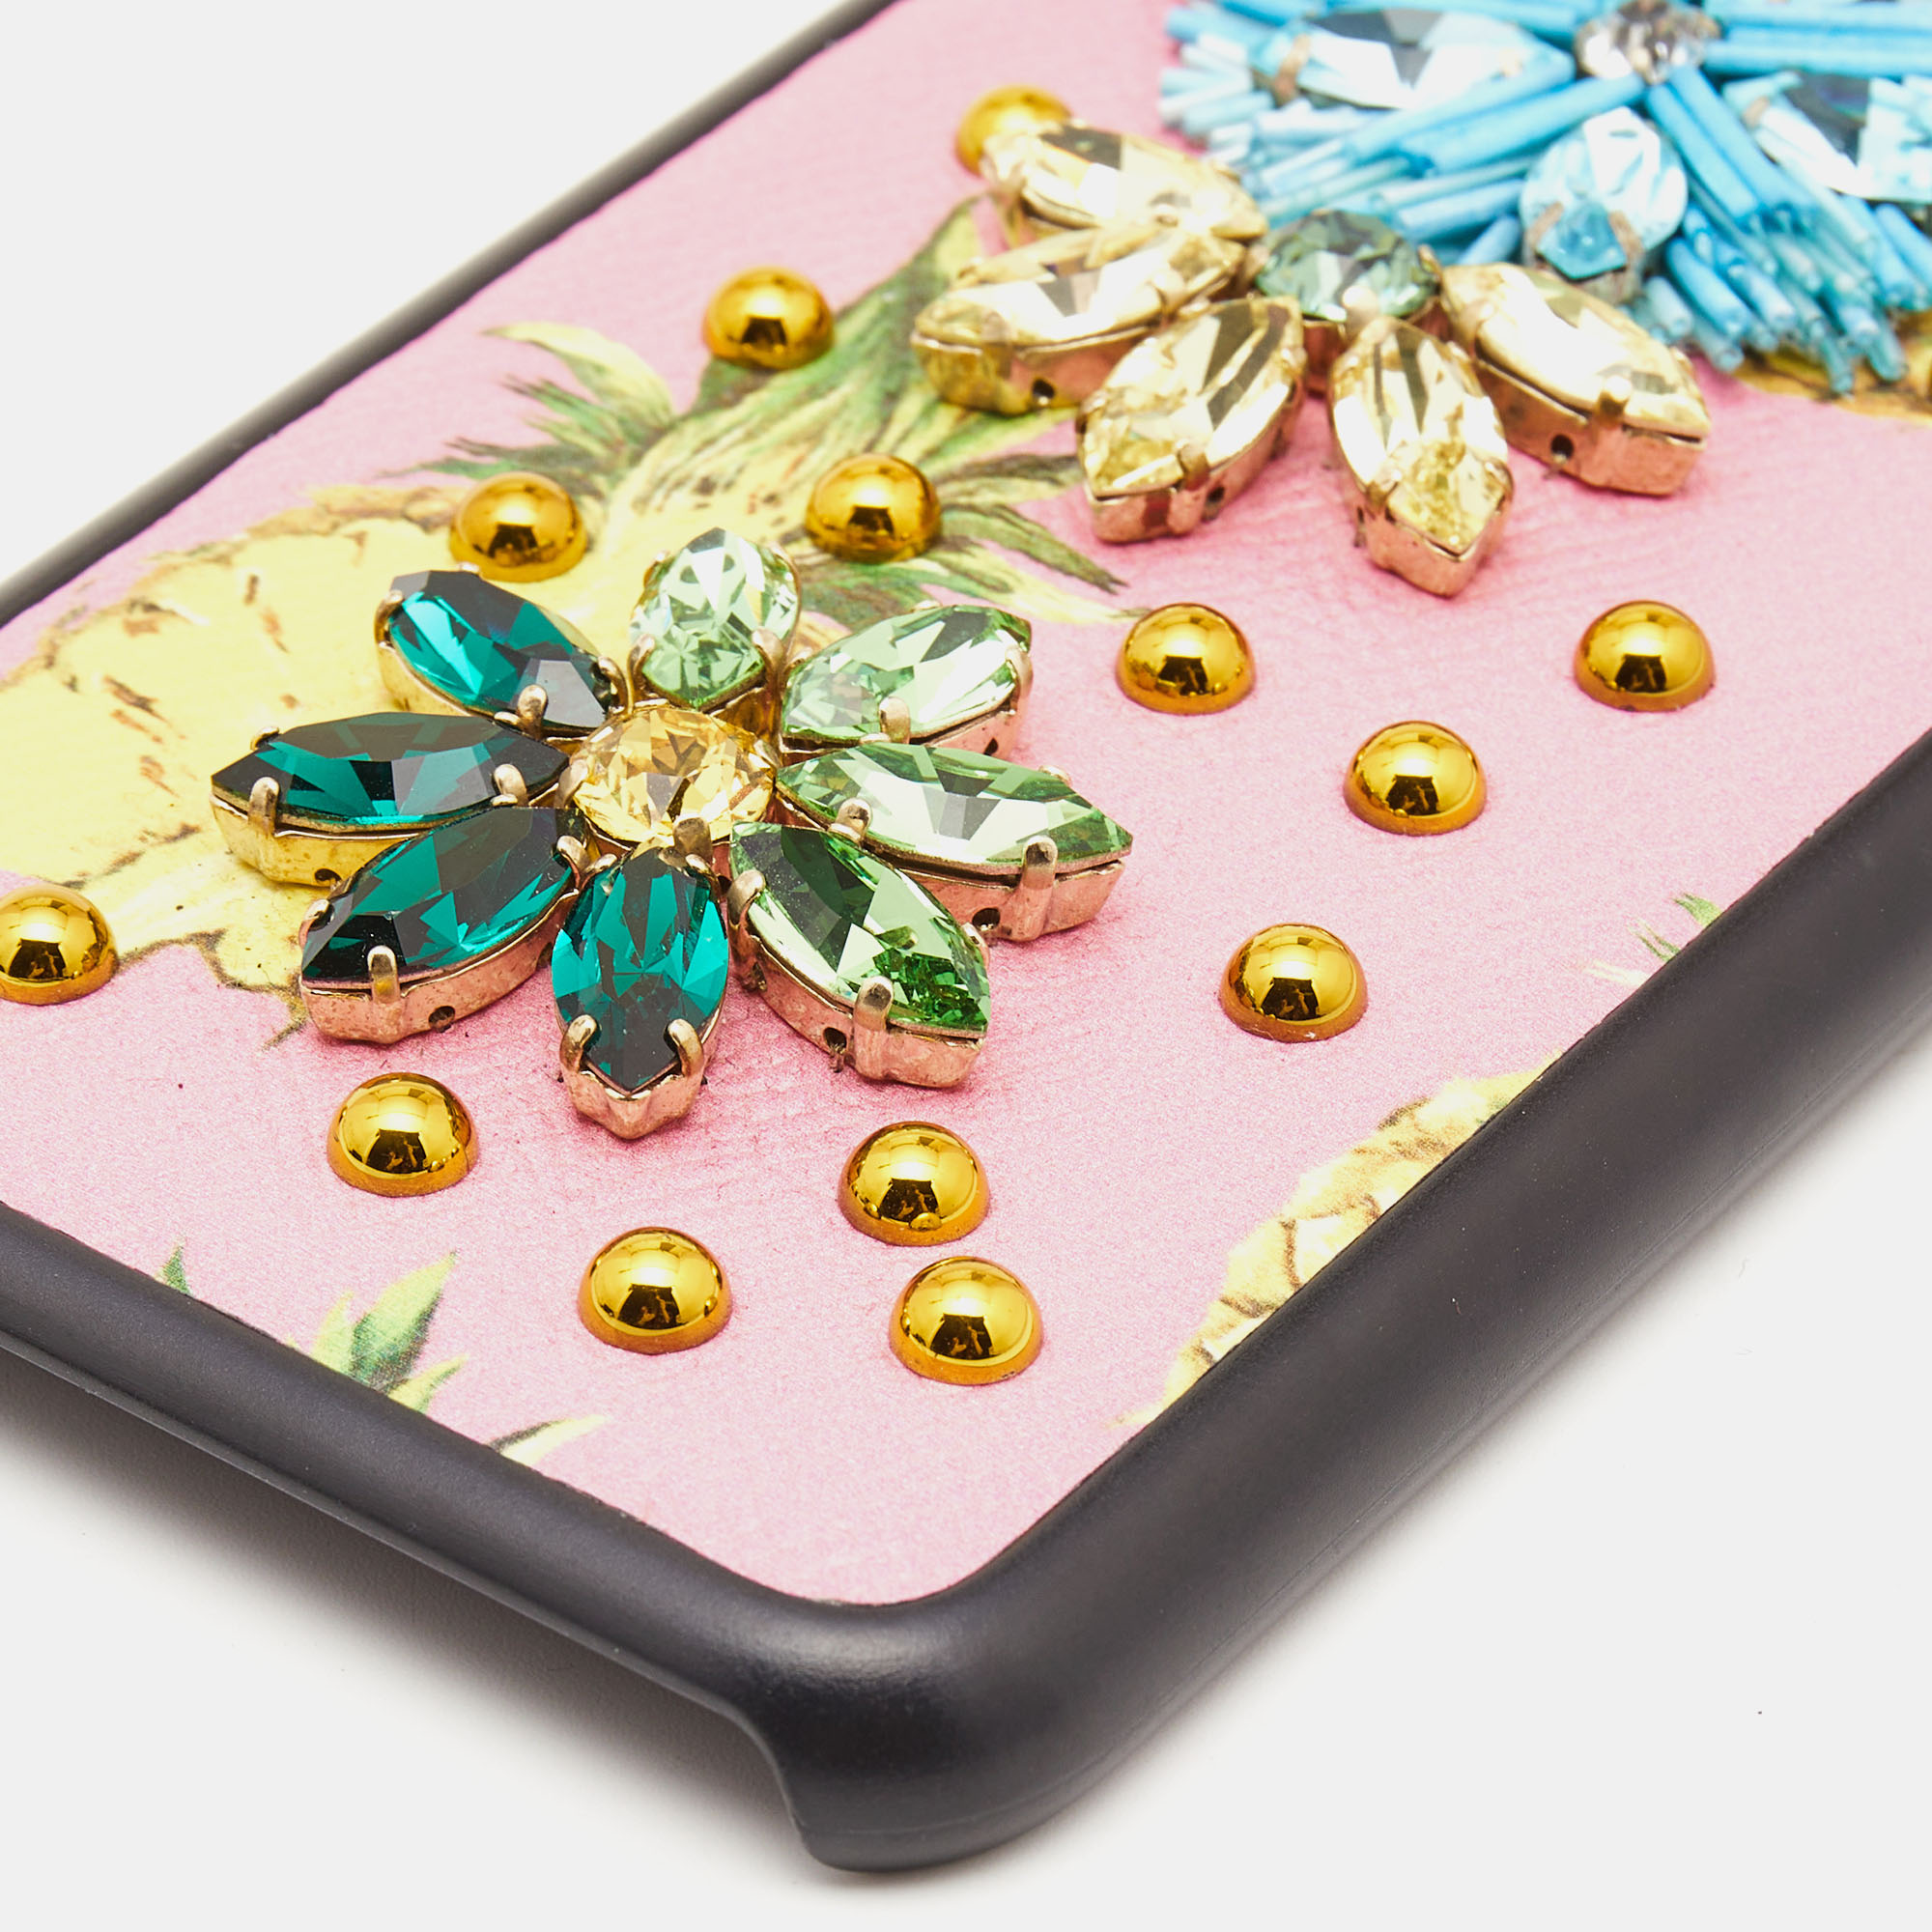 Dolce & Gabbana Pink Fruit Print Leather Crystal Embellished IPhone 7 Plus Case